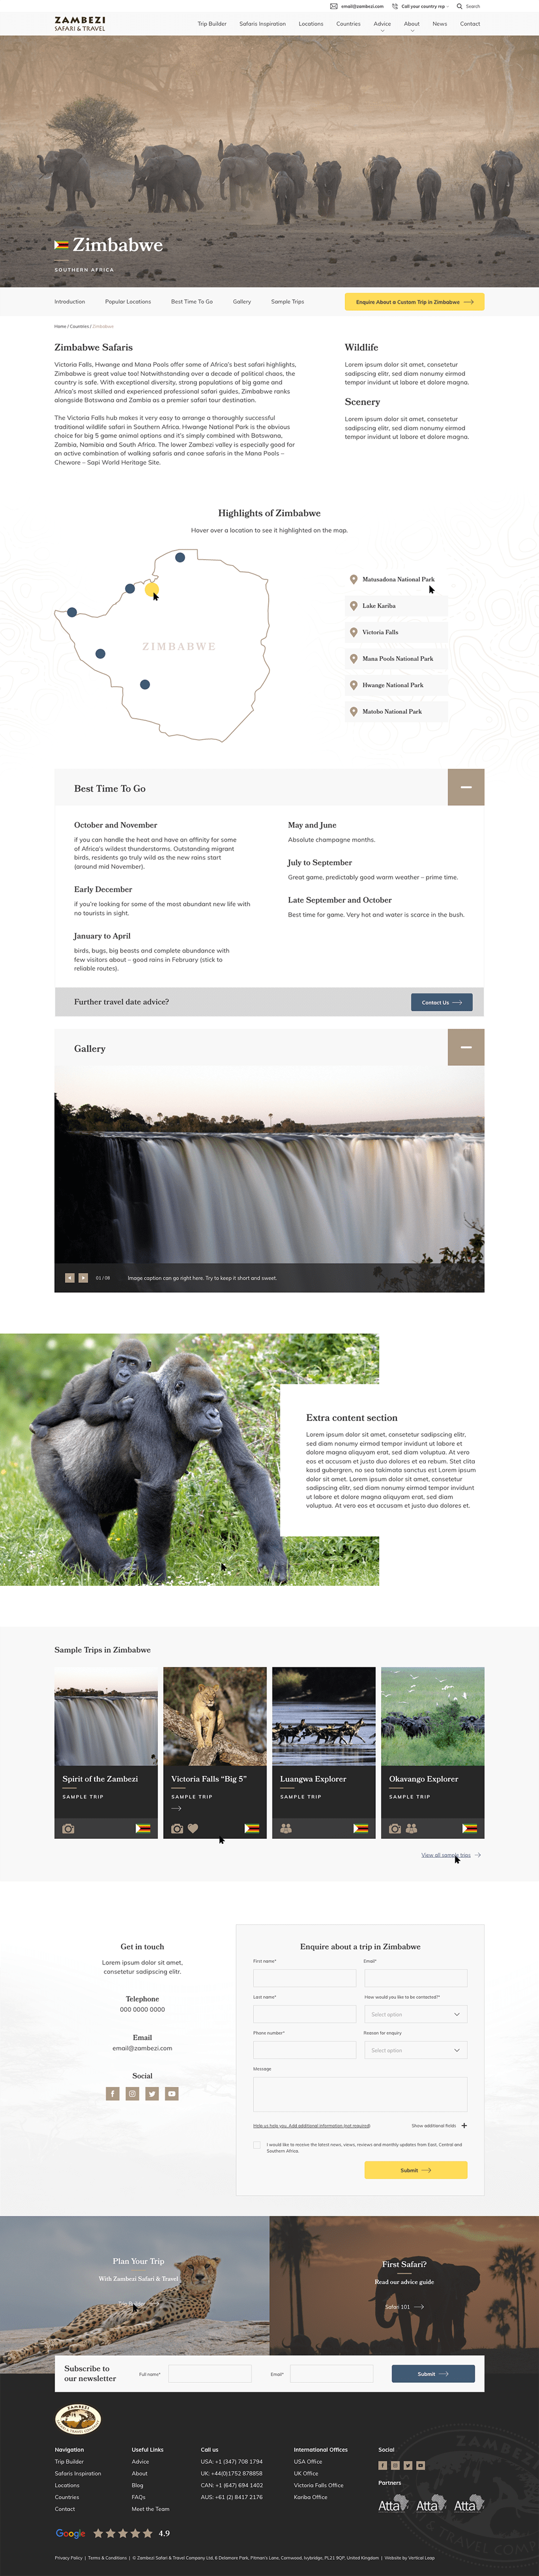 Info tabs on Zambezi homepage